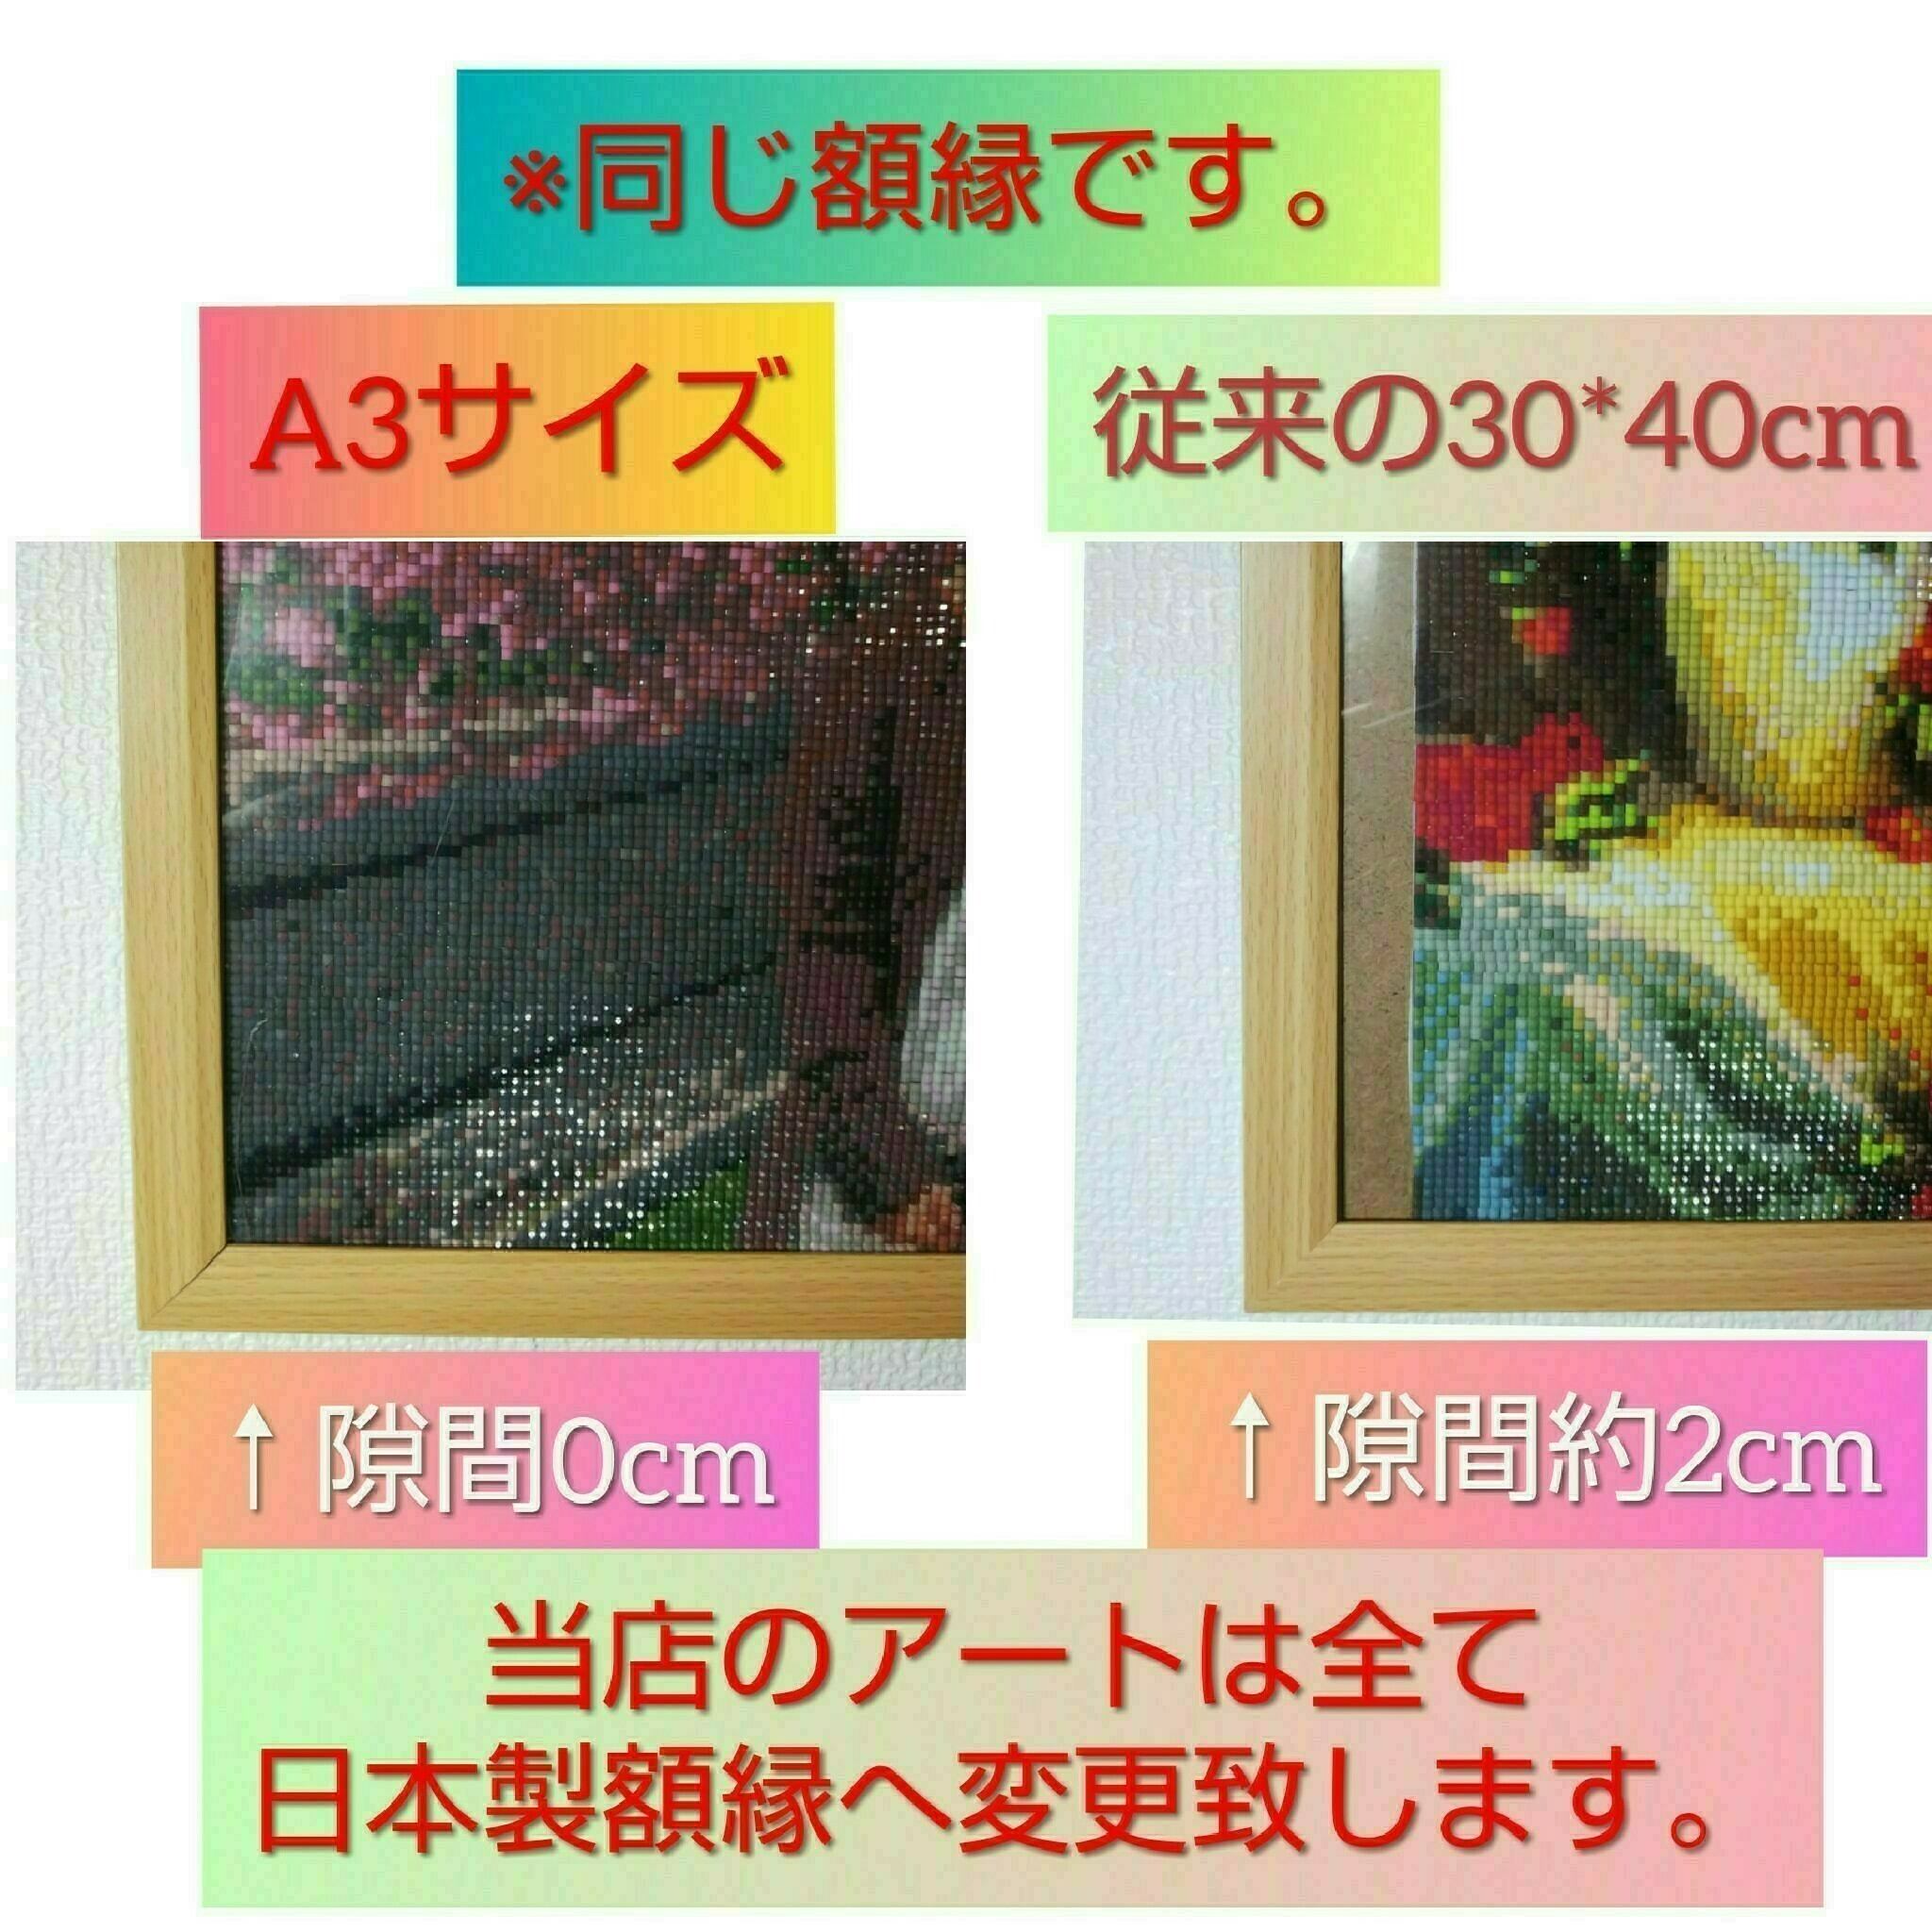 A3サイズ 四角ビーズ【runa-530】ダイヤモンドアート